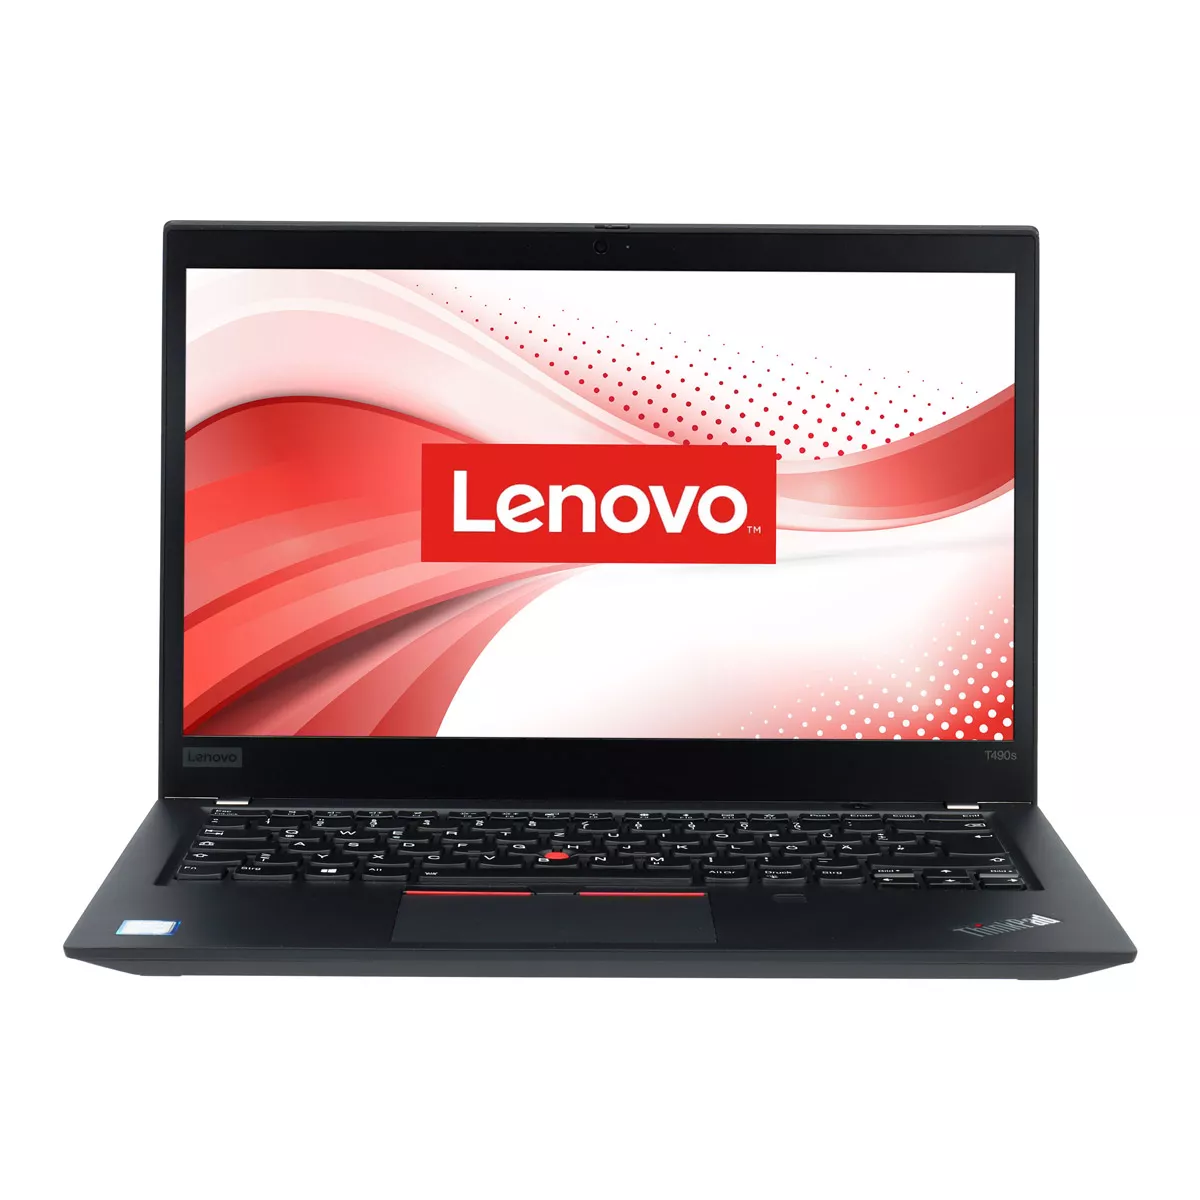 Lenovo ThinkPad T495 AMD Ryzen 7 Pro 3700U Full-HD Touch 500 GB M.2 nVME SSD Webcam B